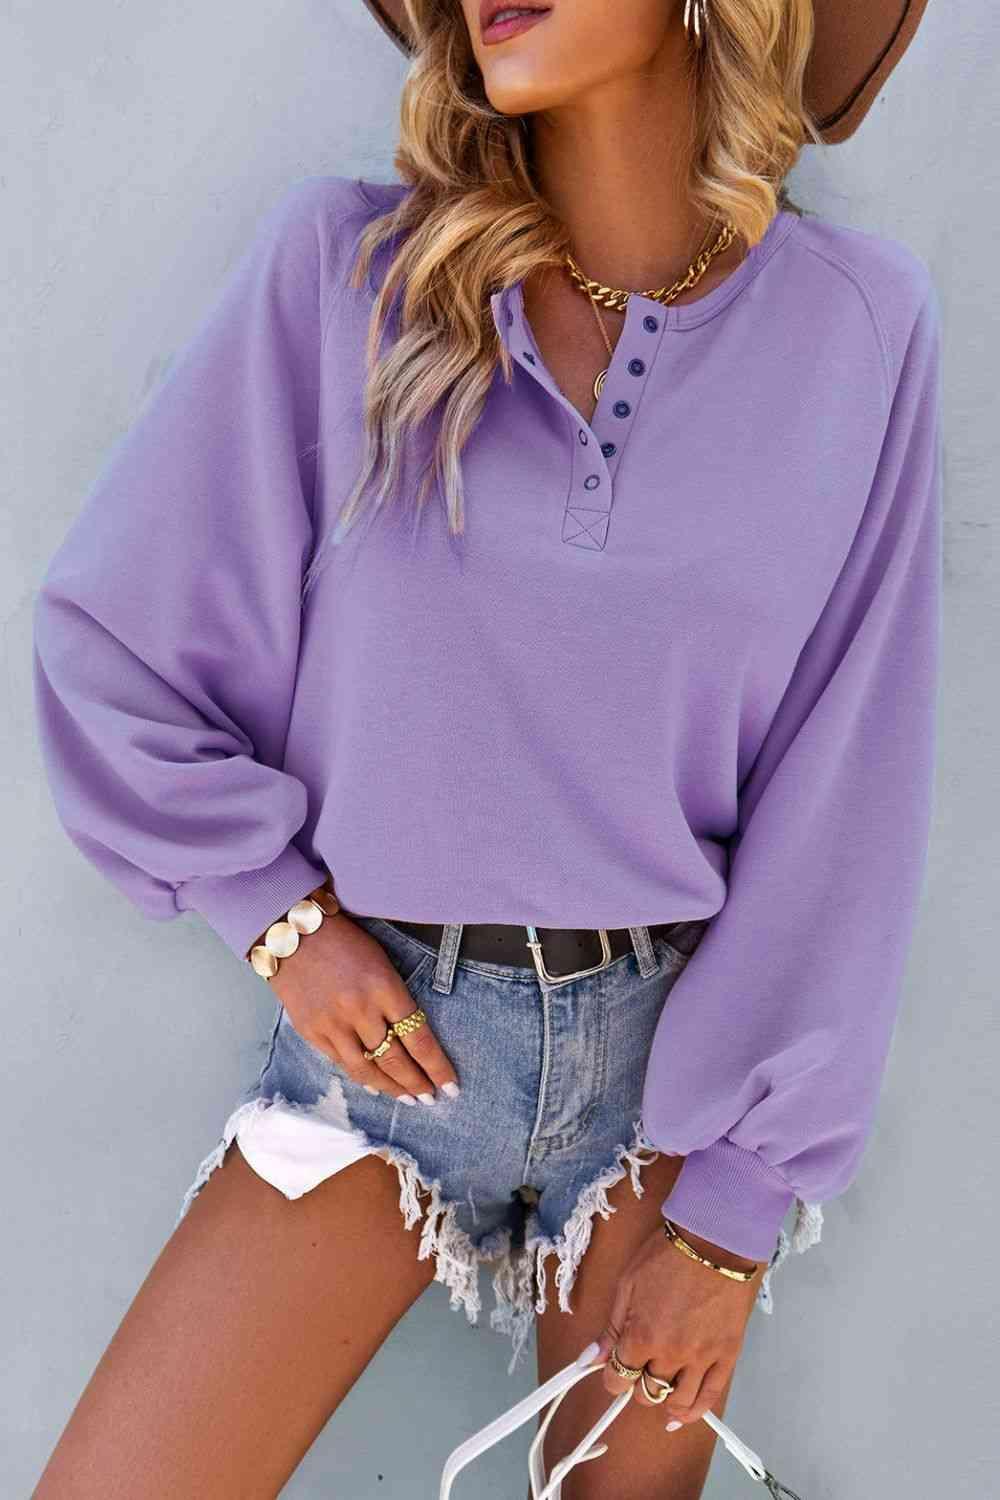 a woman wearing a purple shirt and denim shorts